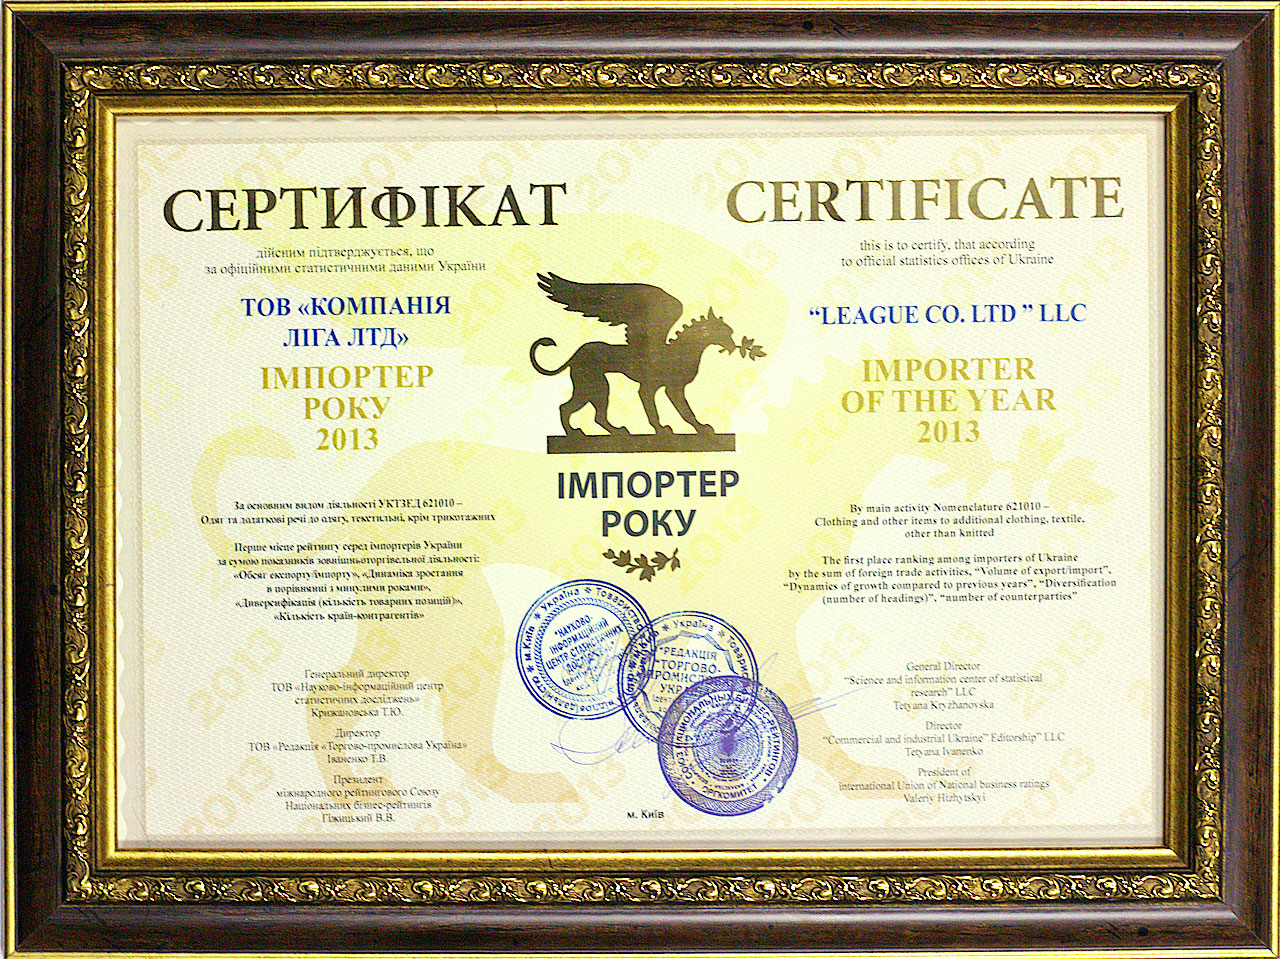 Сертификат импортер года 2012